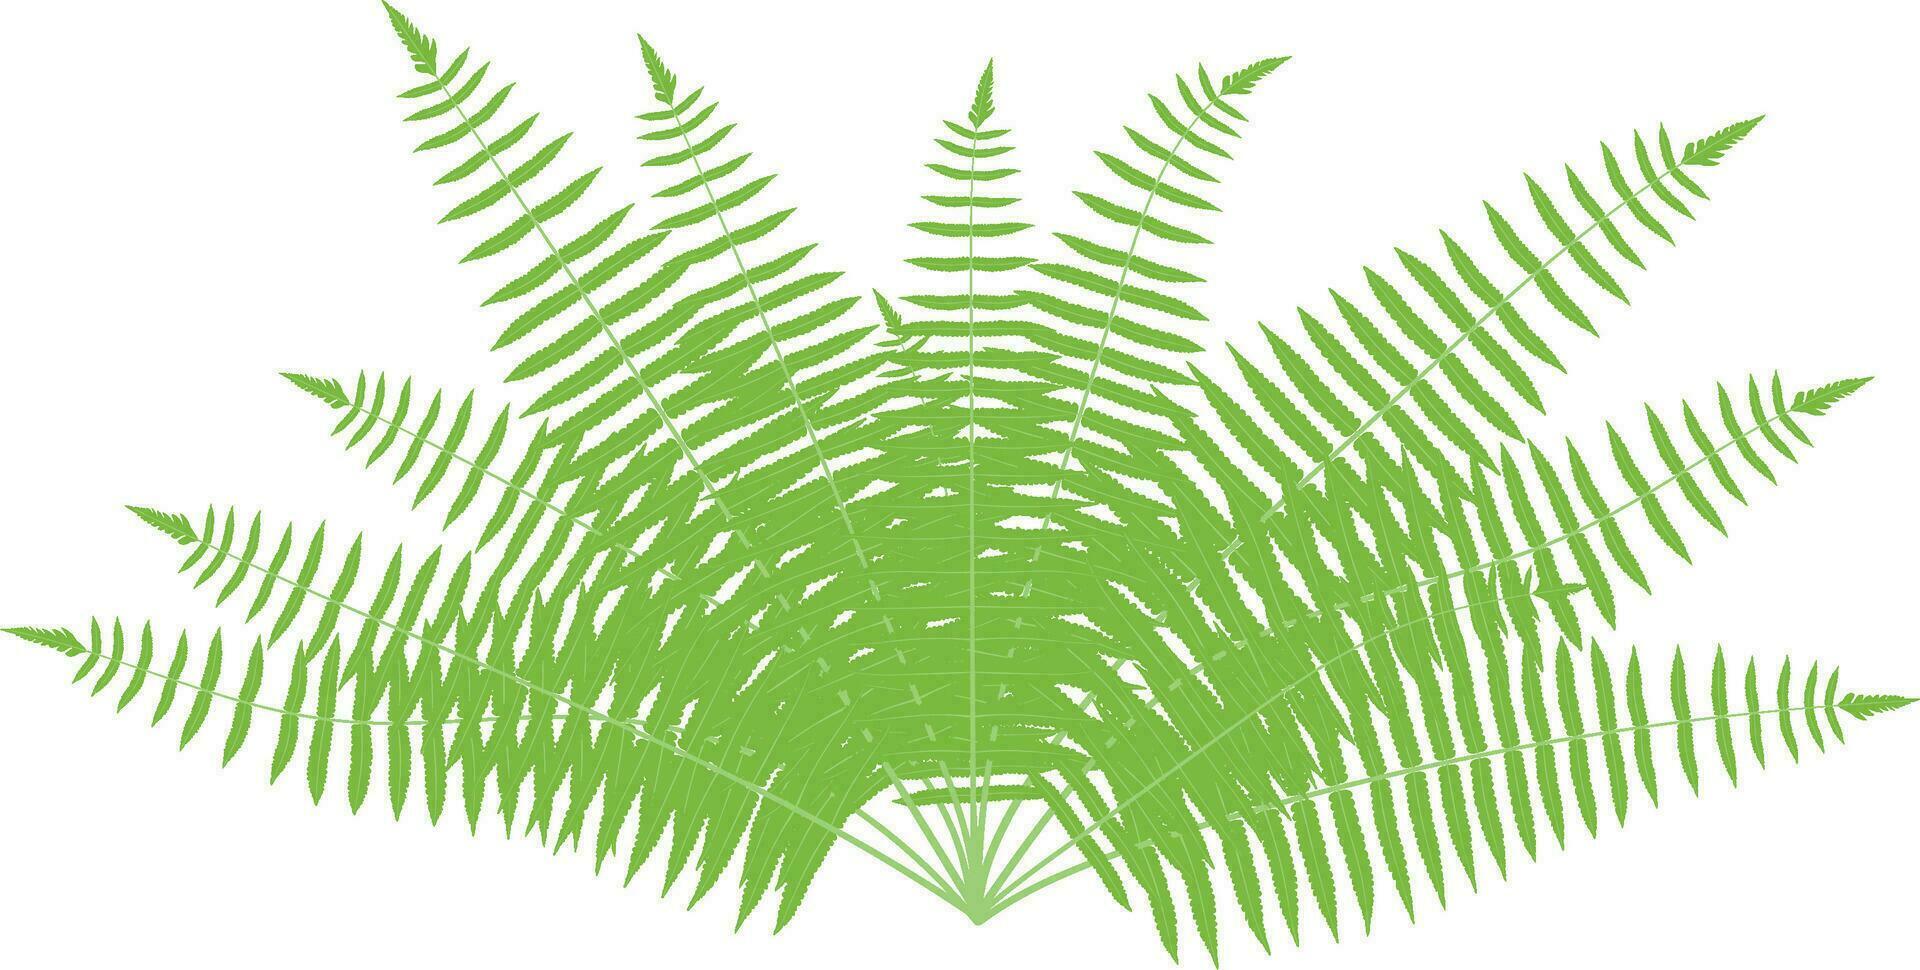 ormbunke löv vektor illustration, grön träd löv vektor, grön löv bakgrund